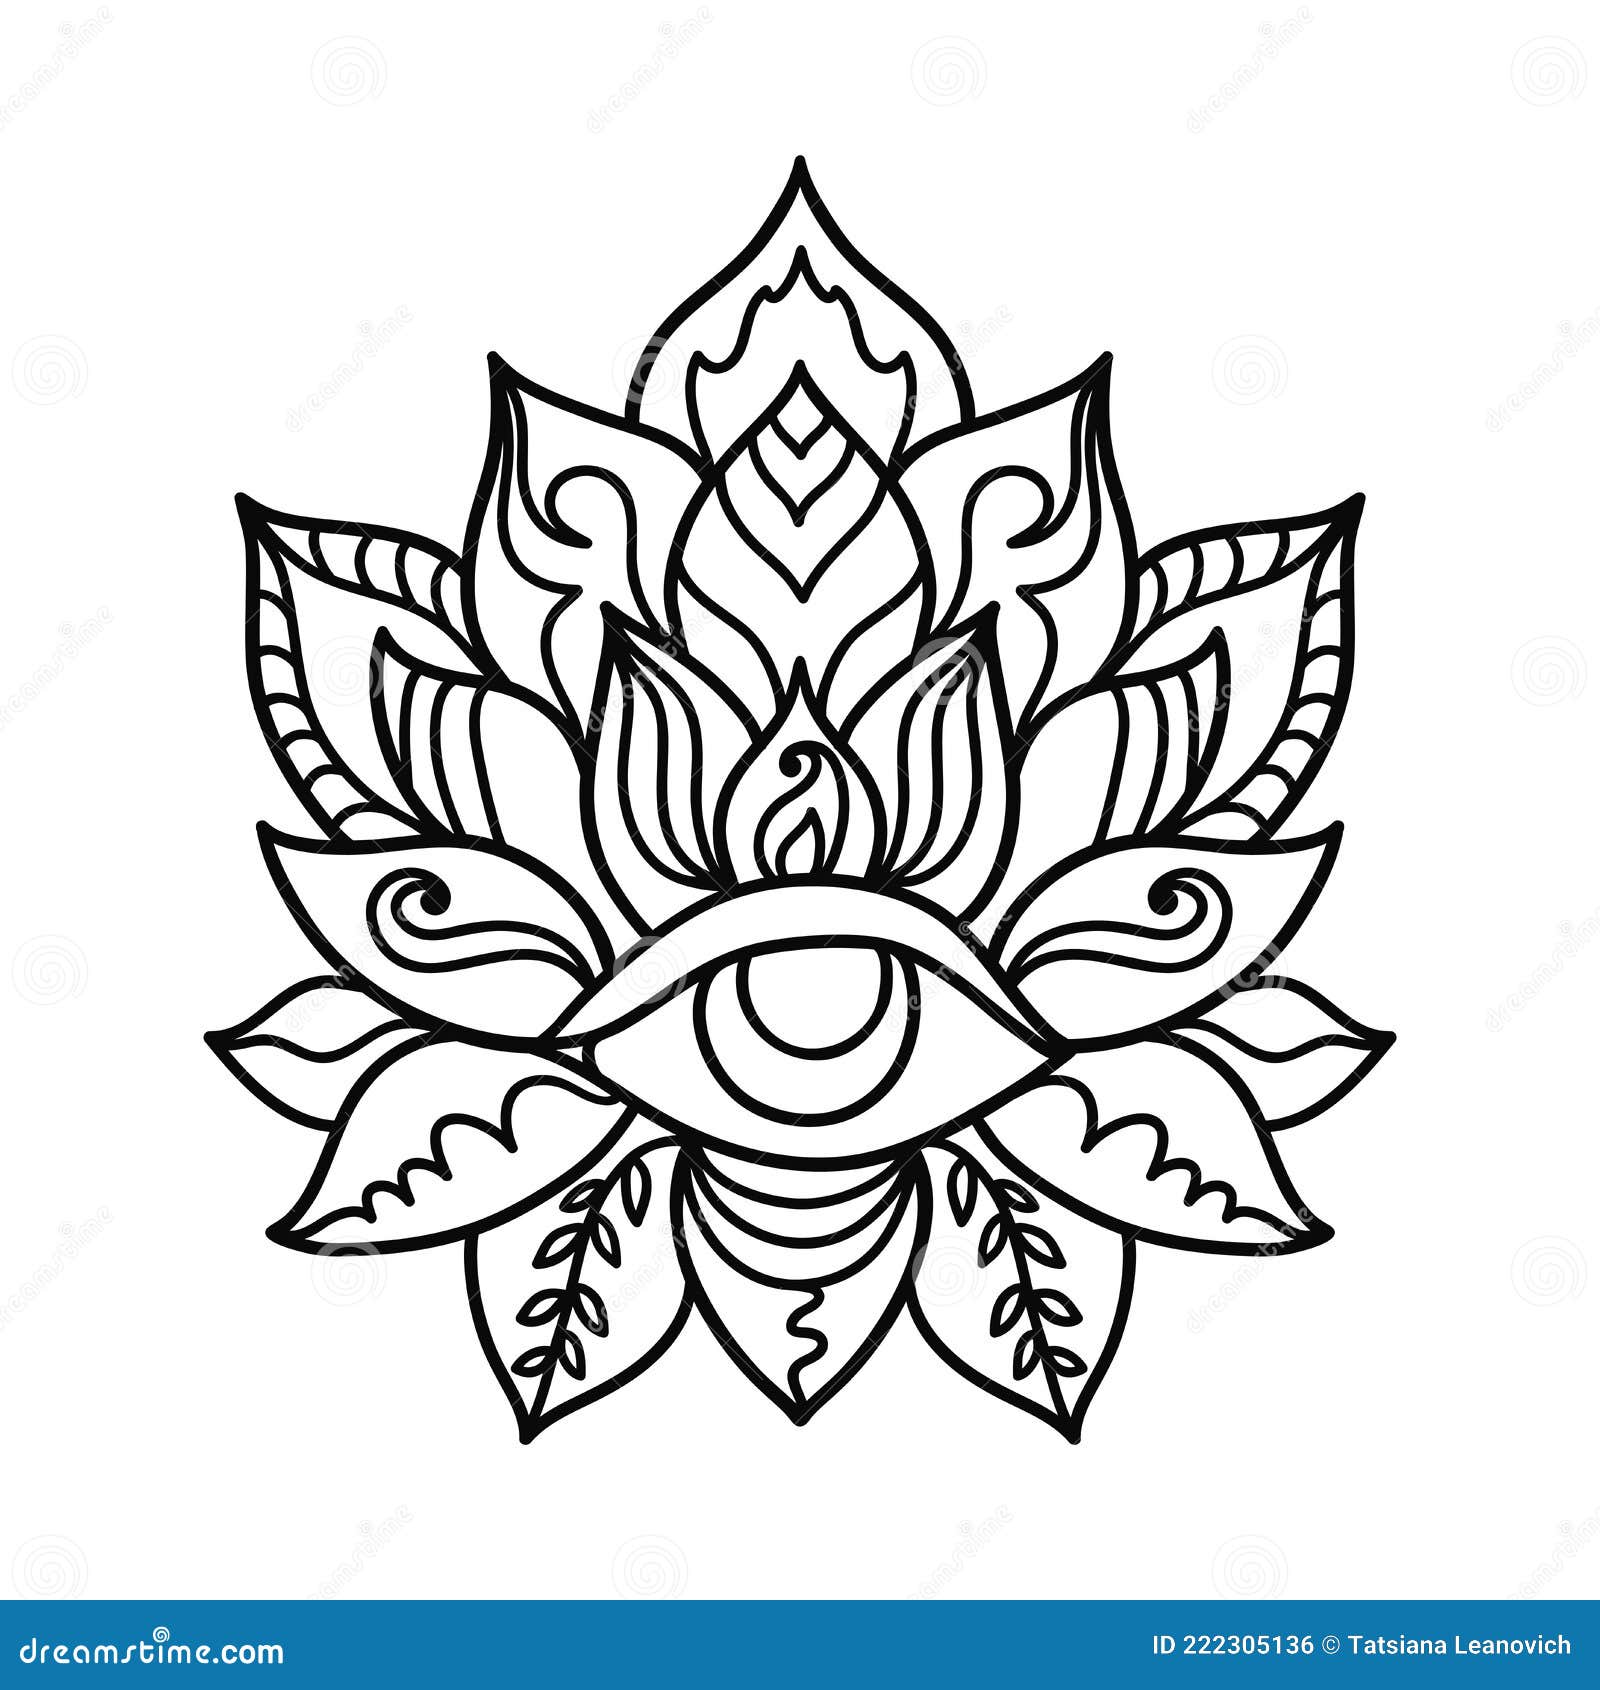 Details 96+ about mandala flower tattoo latest .vn